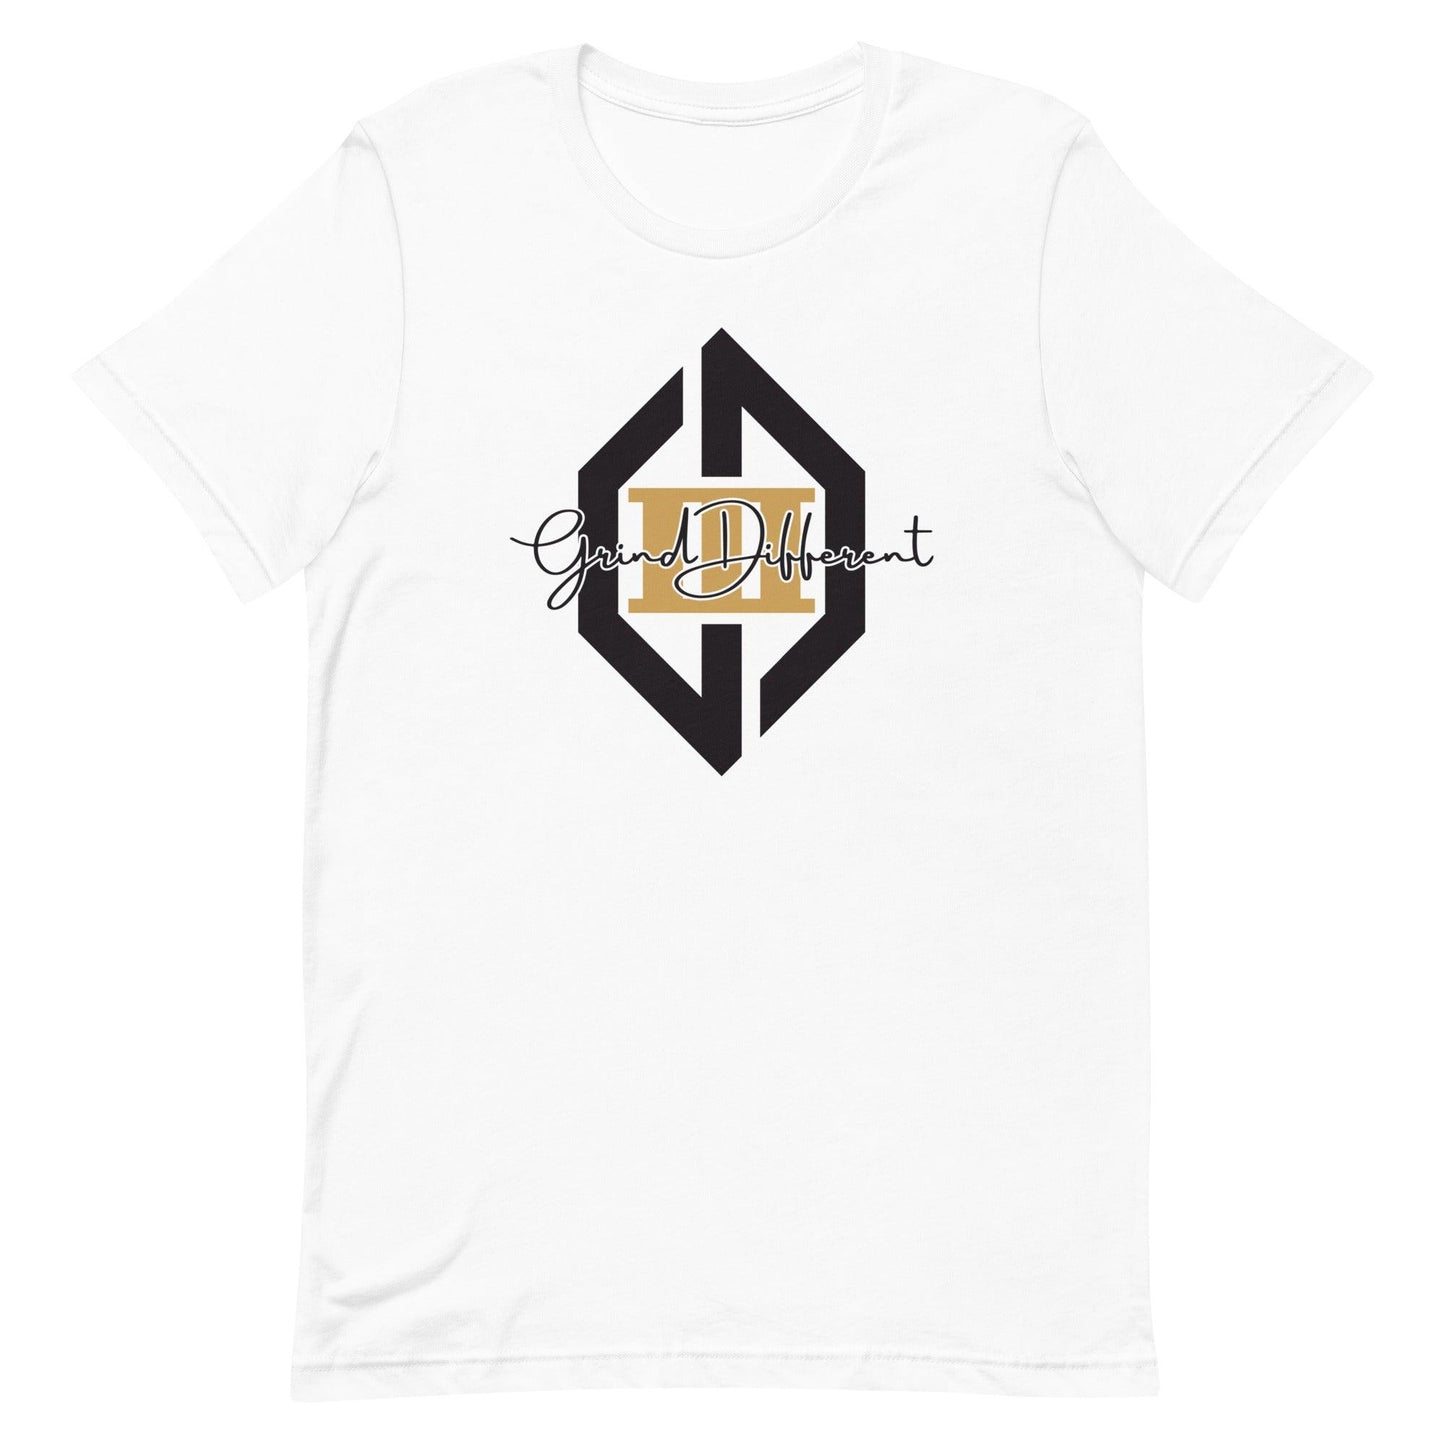 Claudale Davis III “Signature” t-shirt - Fan Arch